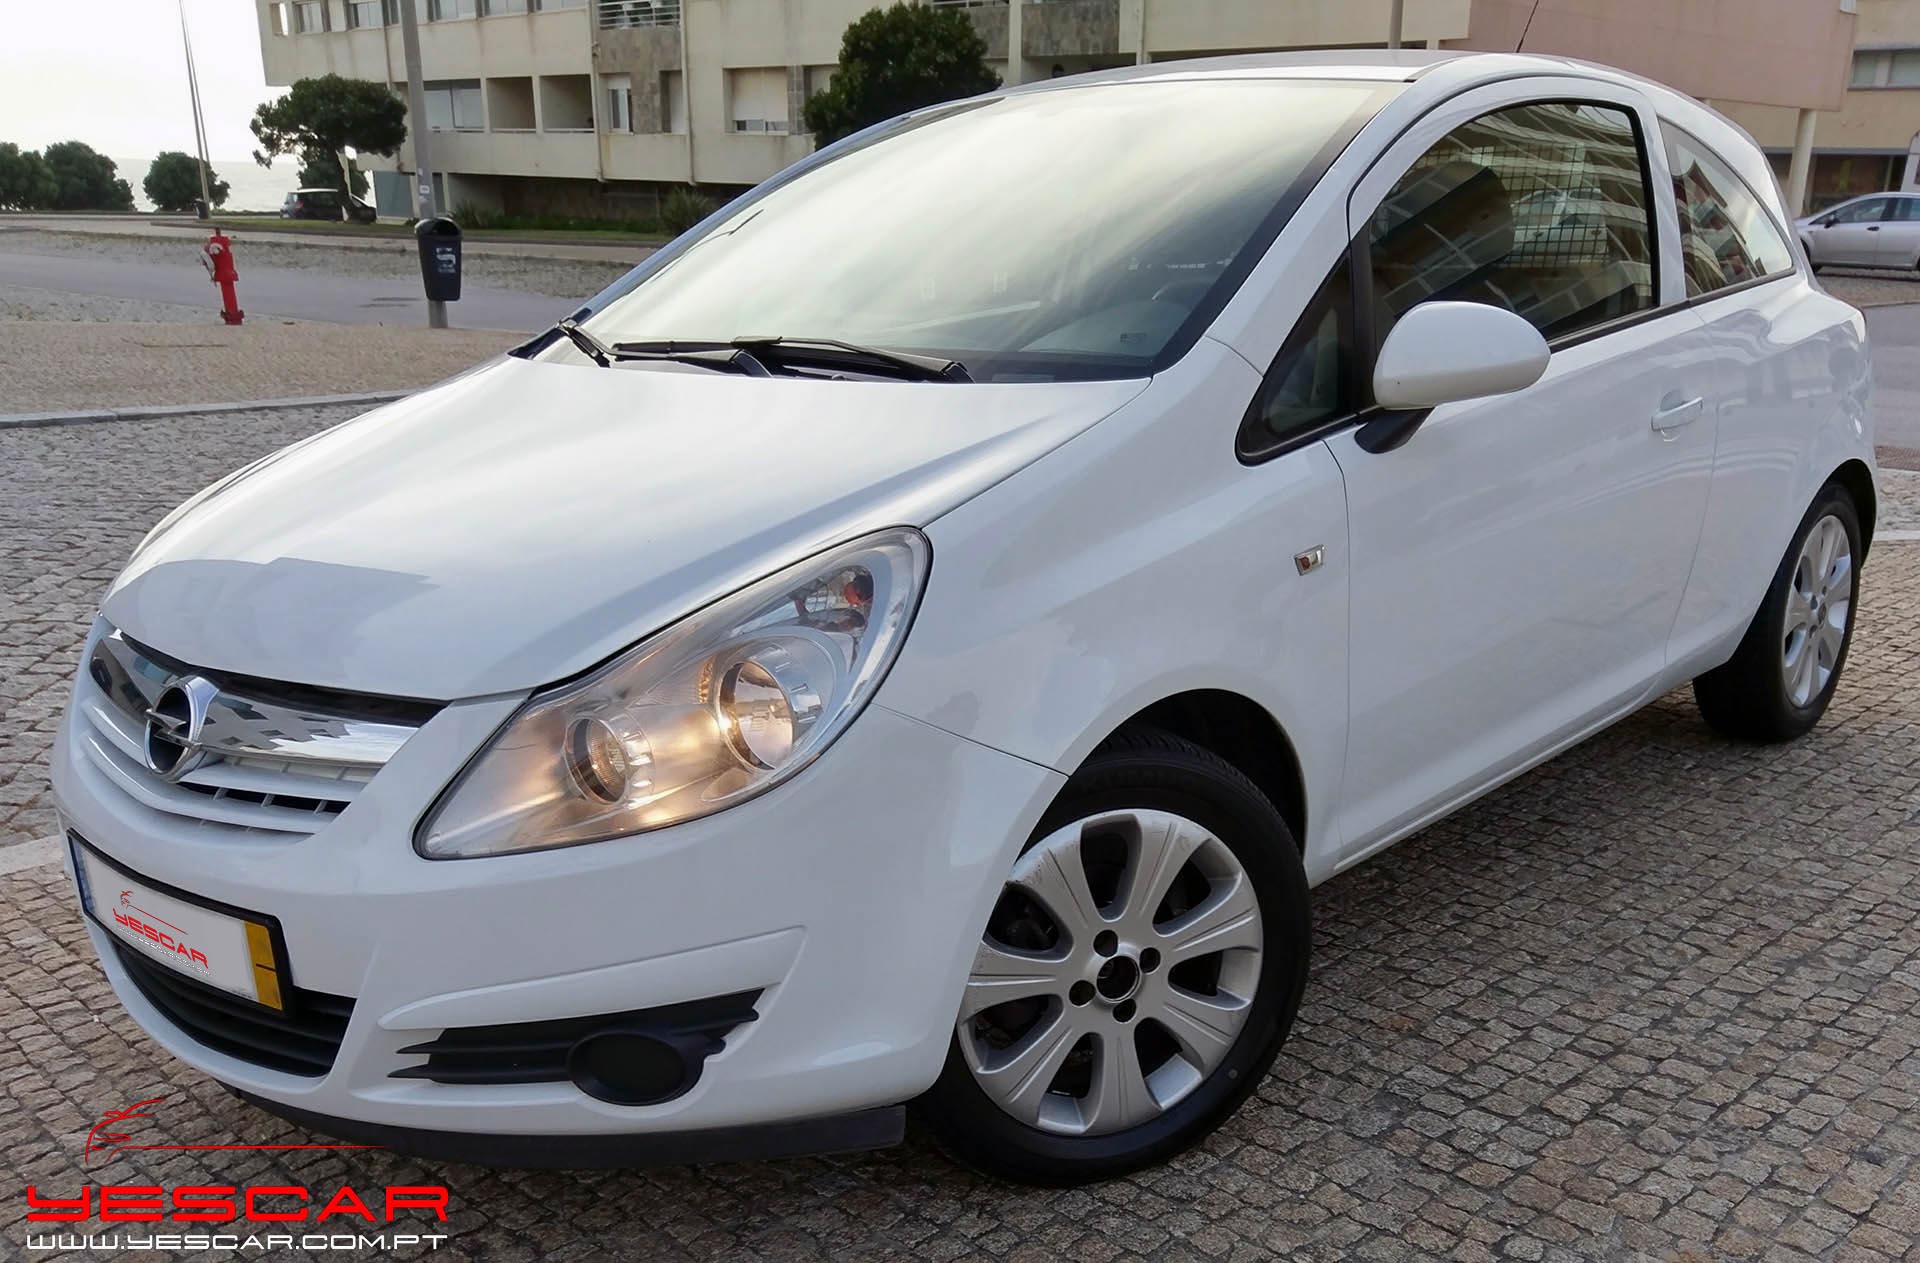 YESCAR_Opel_Corsa_Van (11)